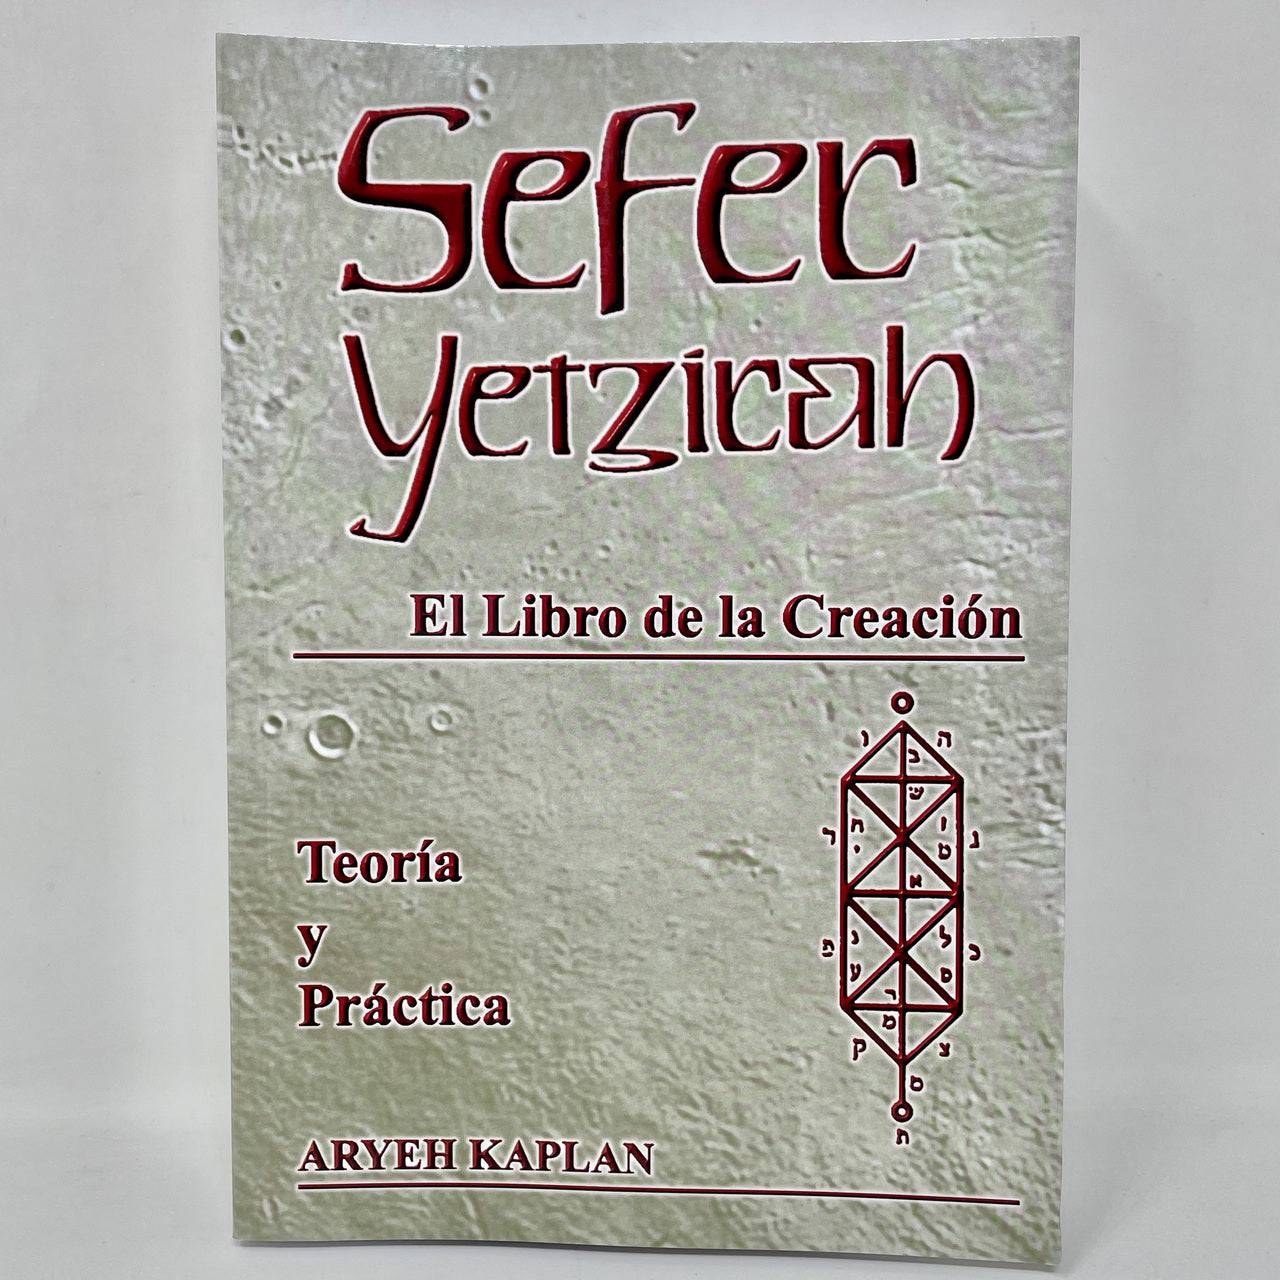 Sefer Yetzirah El libro de la creación por Aryeh Kaplan - Libreria Jerusalem Centro